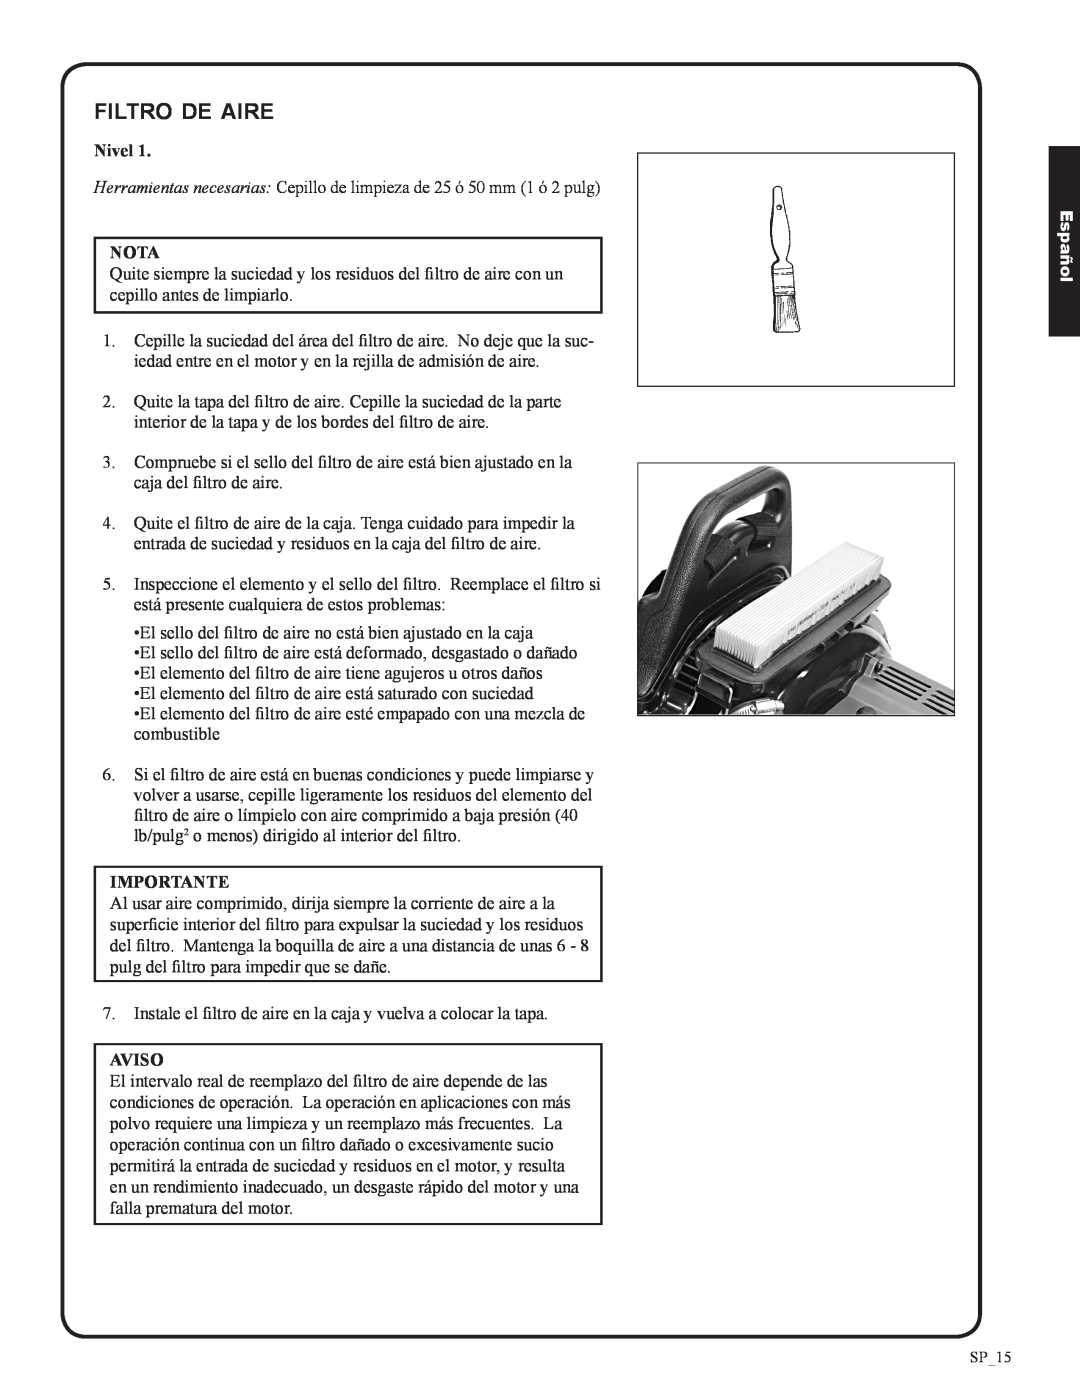 Shindaiwa 82050, EB633RT manual filtro de aire, Nivel, Aviso, Nota, Importante, Español 